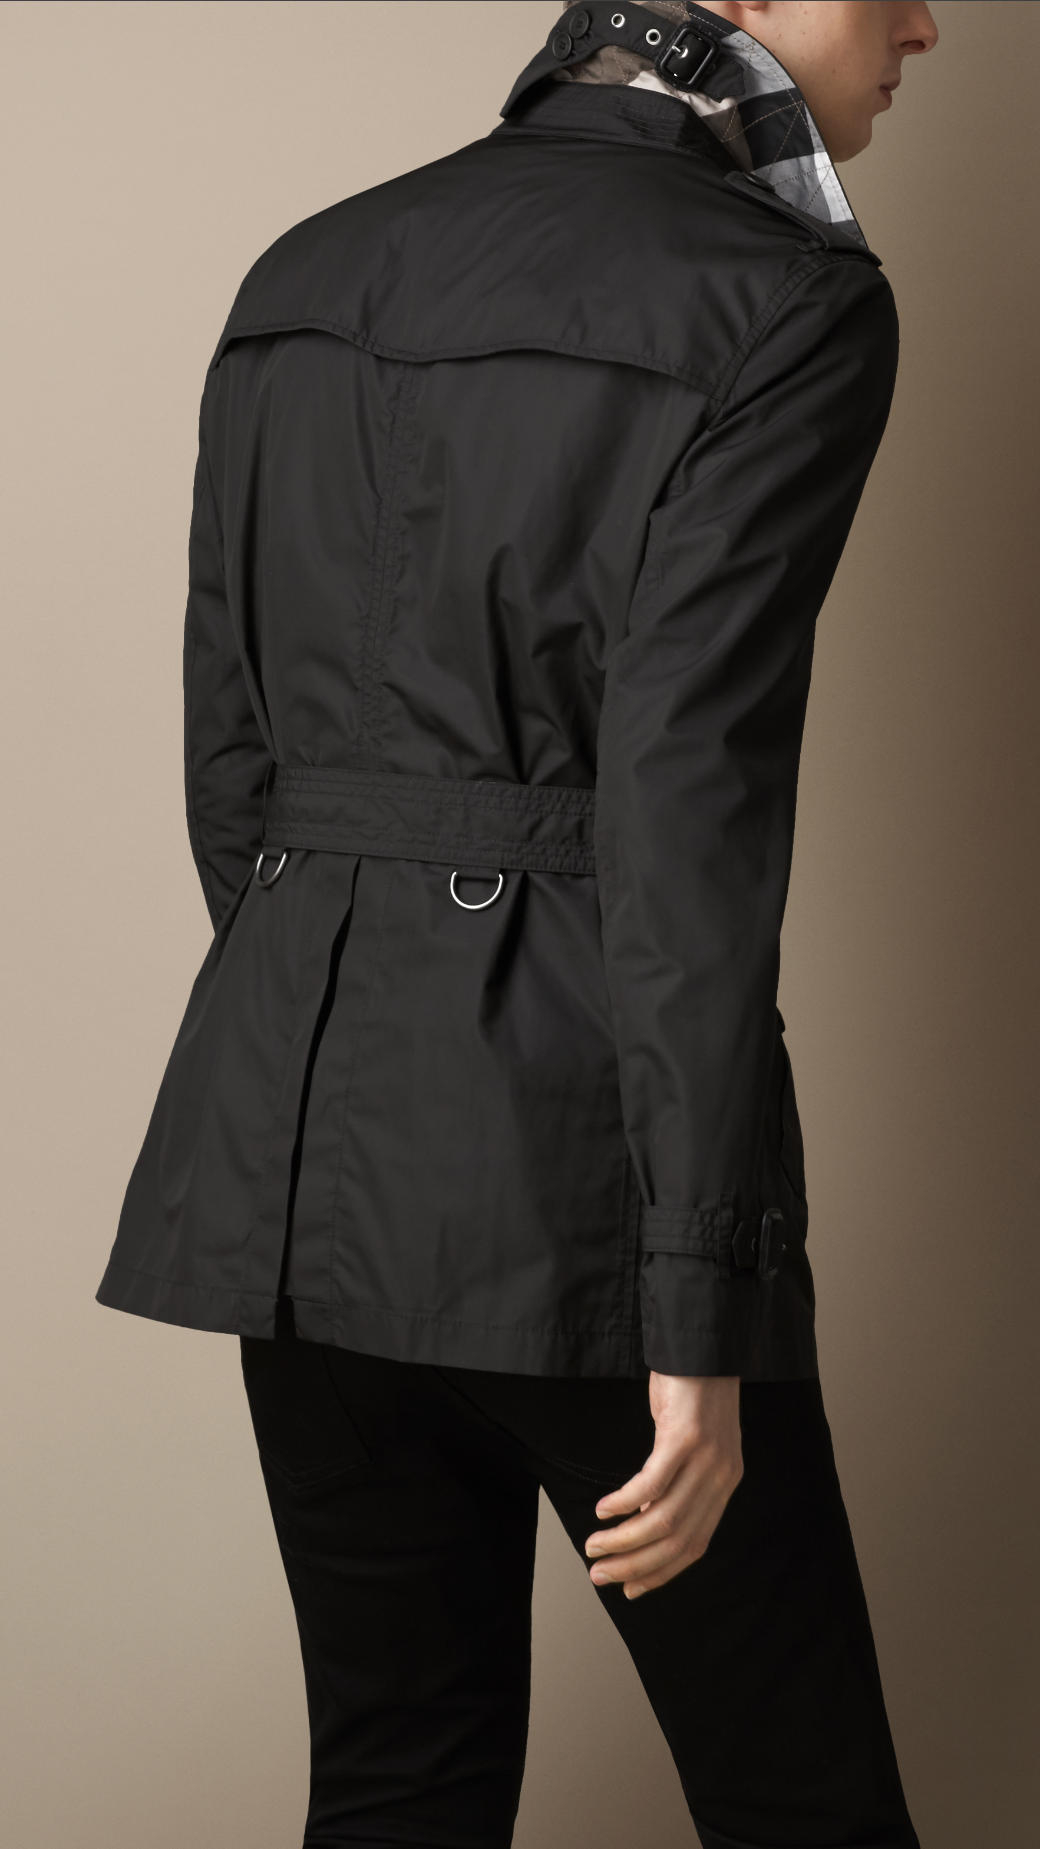 Burberry Short Technical Trench Coat in Black for Men - Lyst